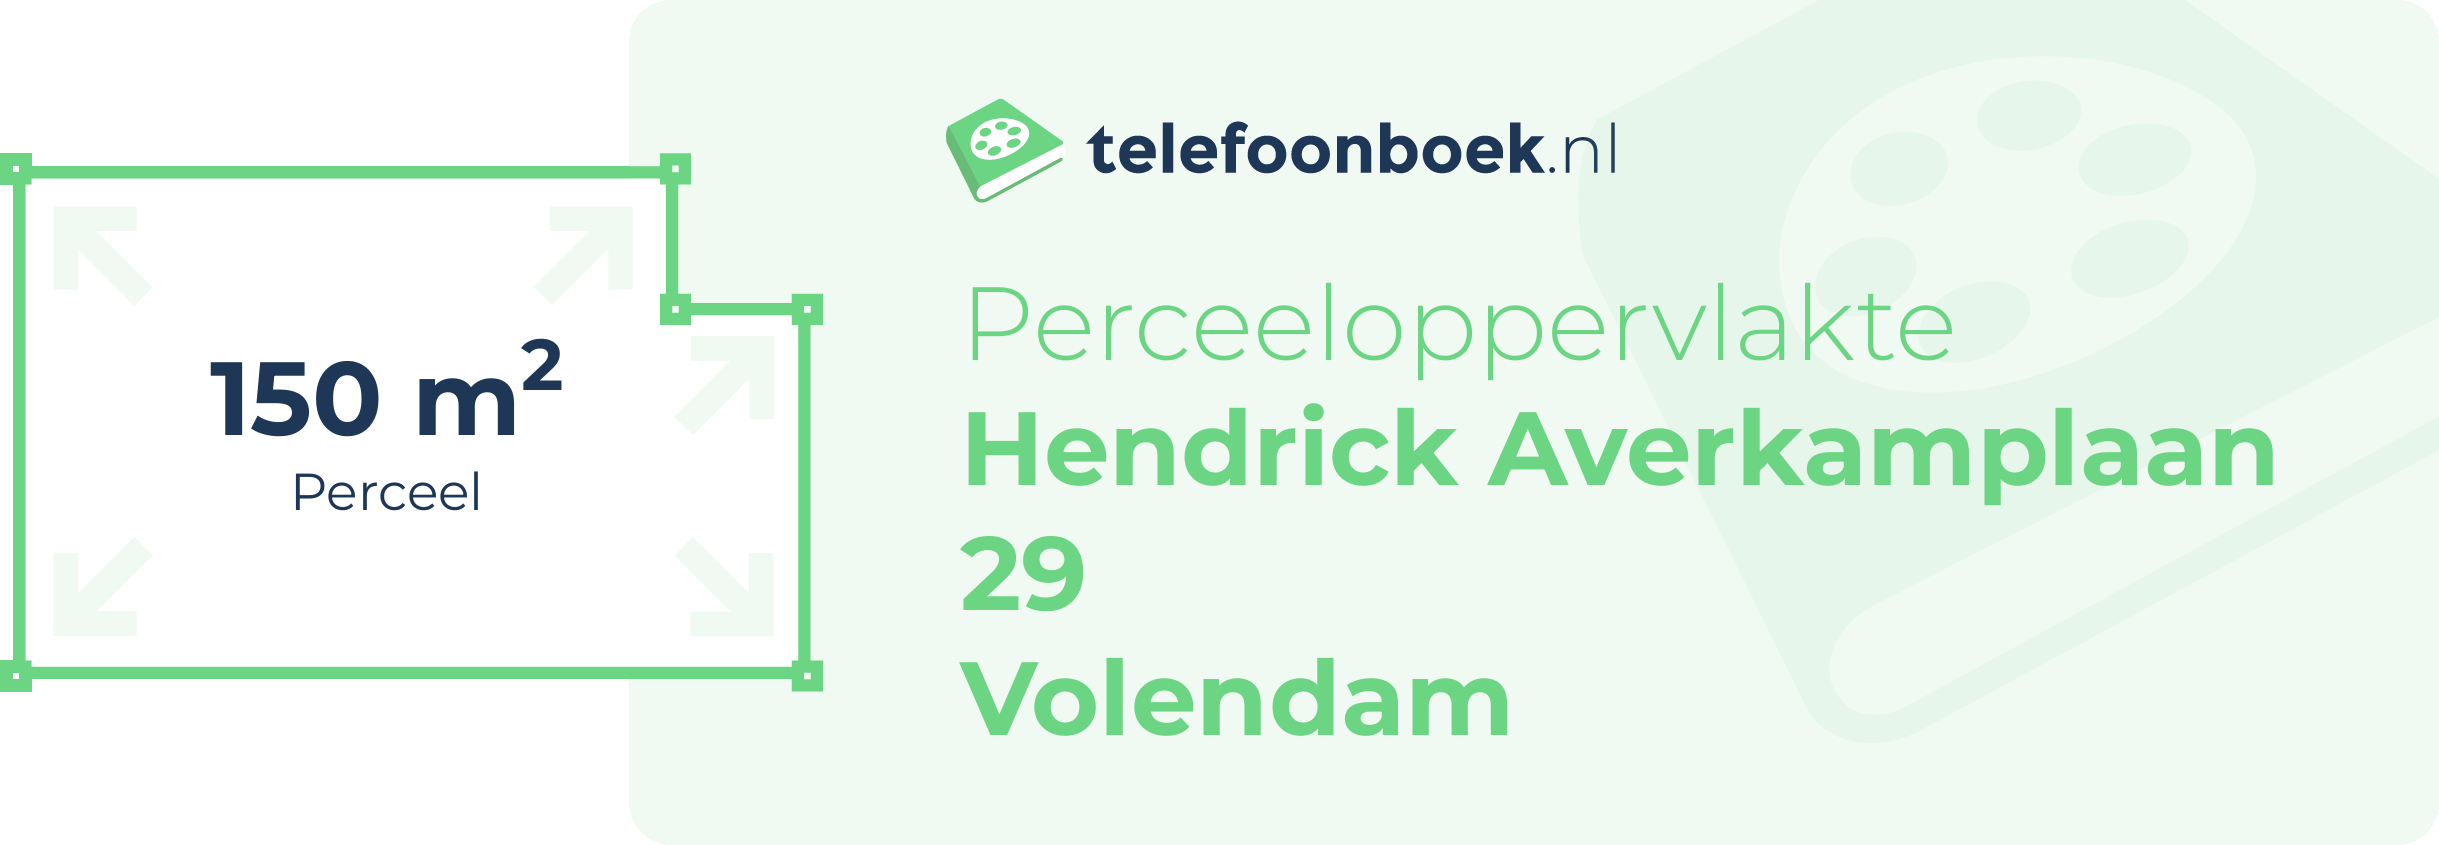 Perceeloppervlakte Hendrick Averkamplaan 29 Volendam